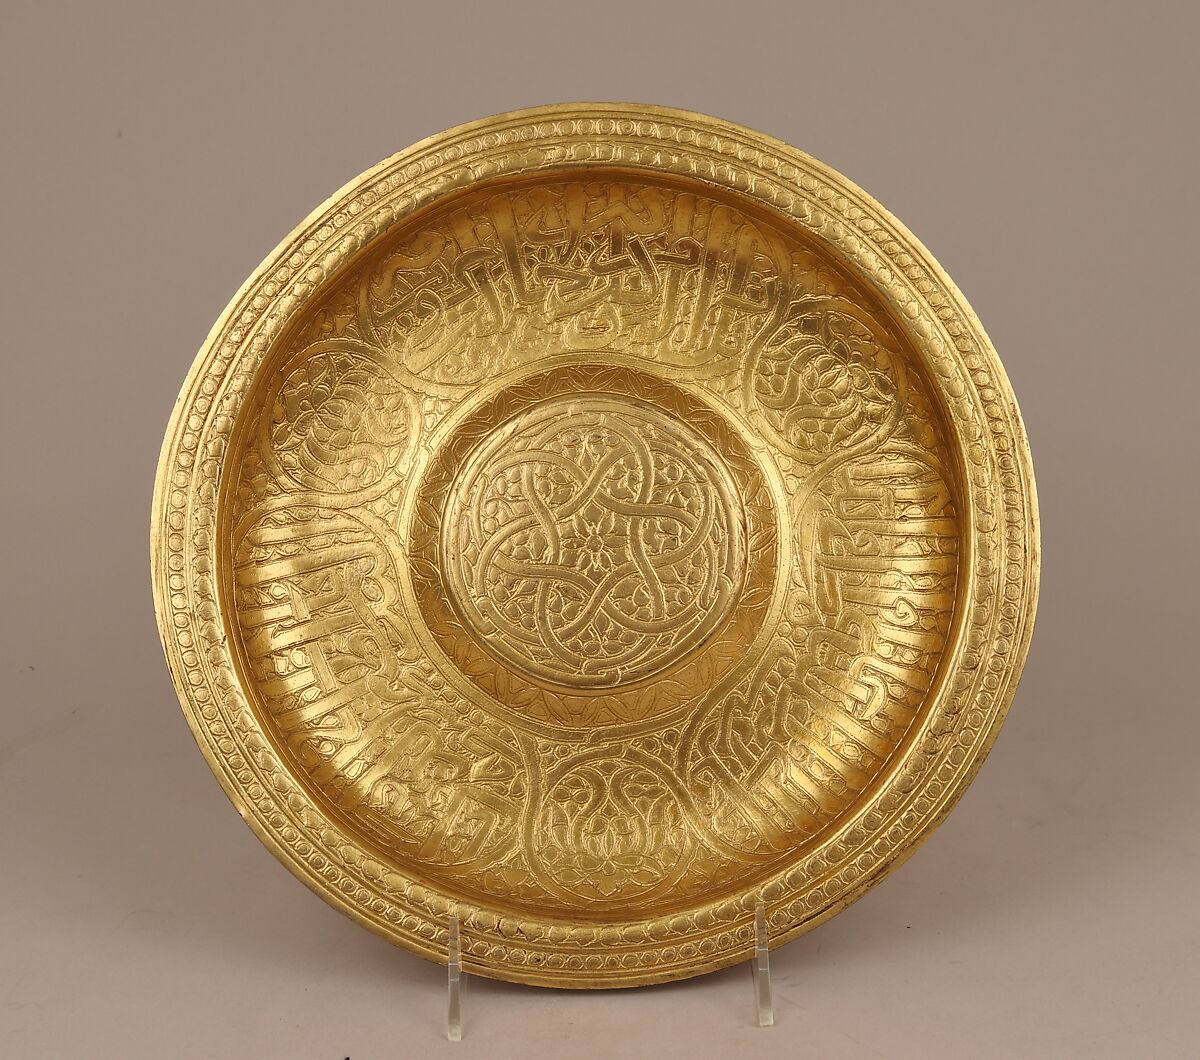 Bowl or plateau, Brass, British, after Italian, Venice original 